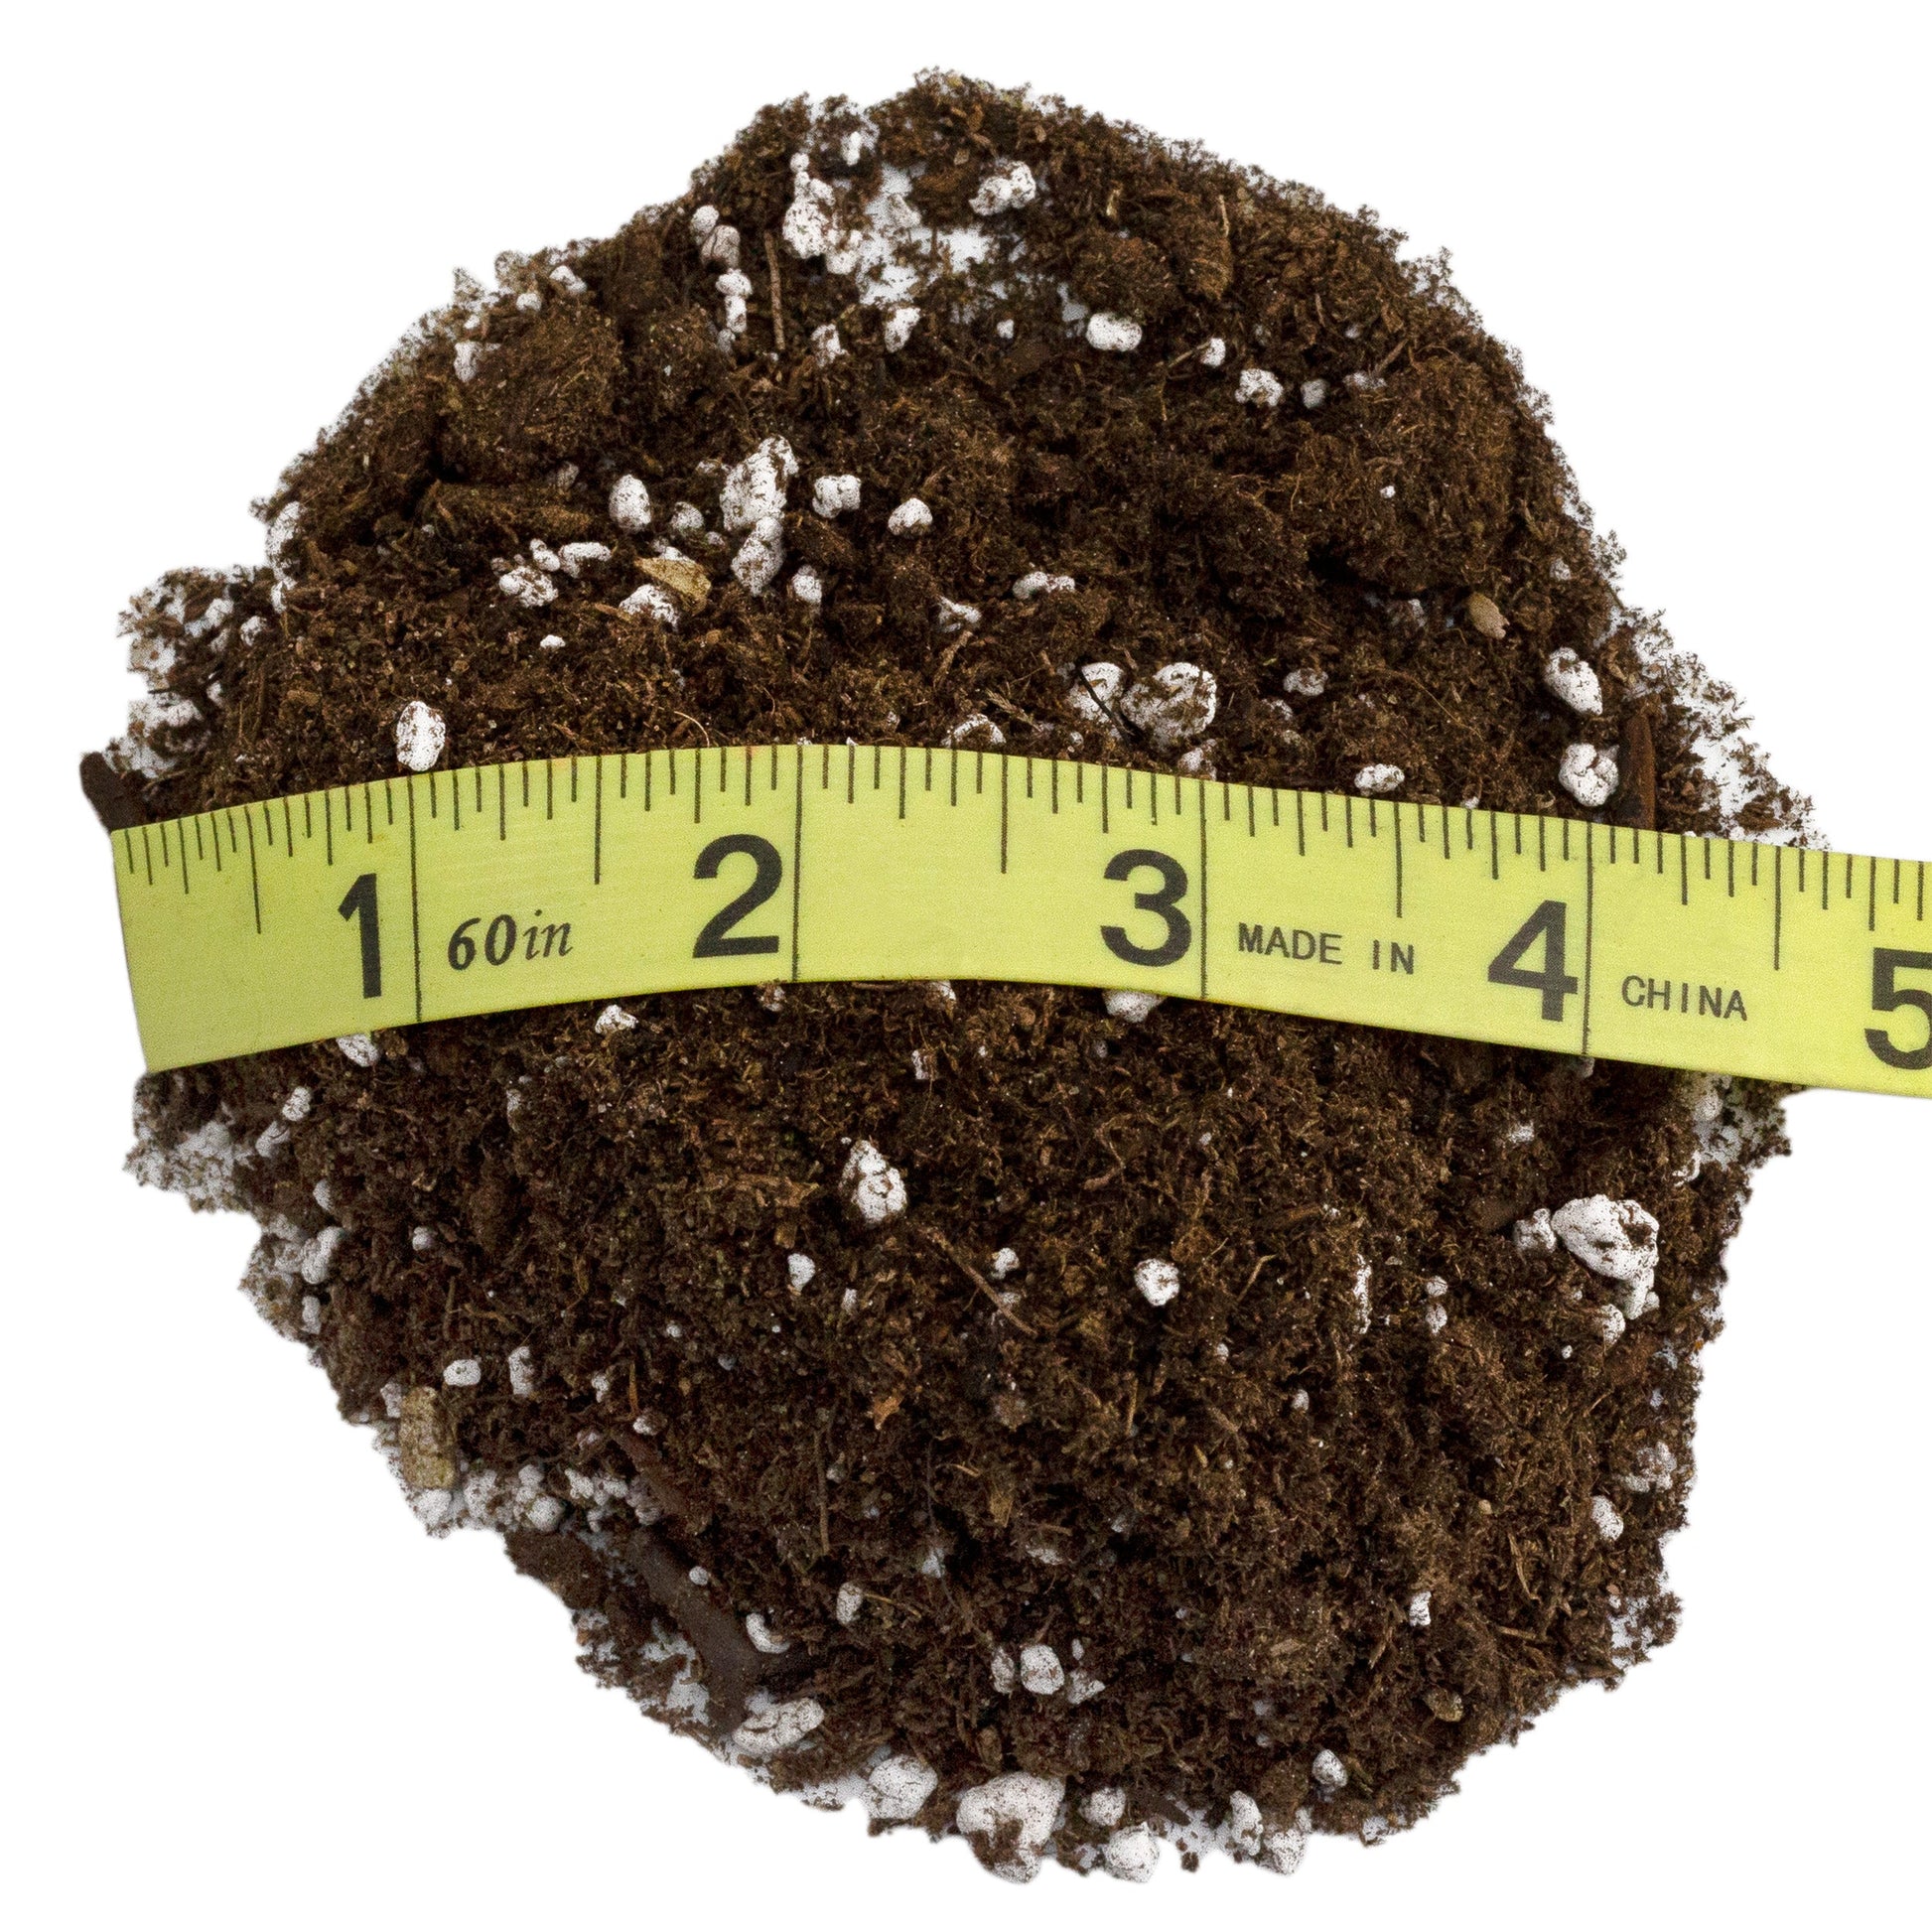 Avocado Tree Potting Soil Mix (8 Quarts) - SSKIT166